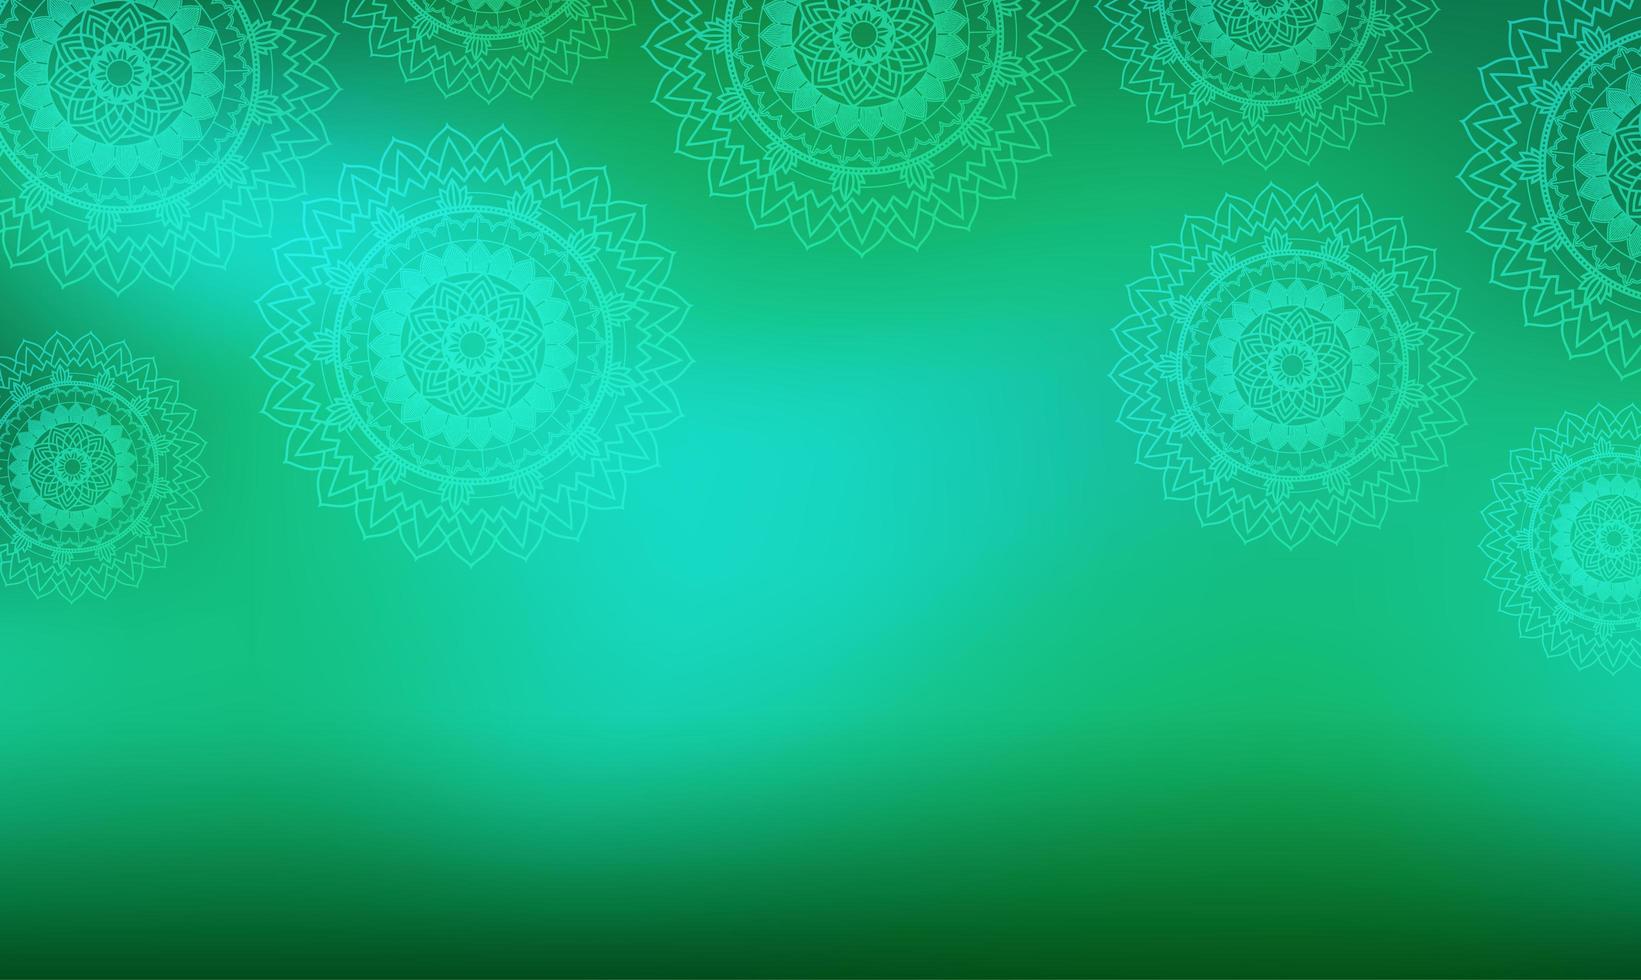 mandalapatronen op groene achtergrond vector